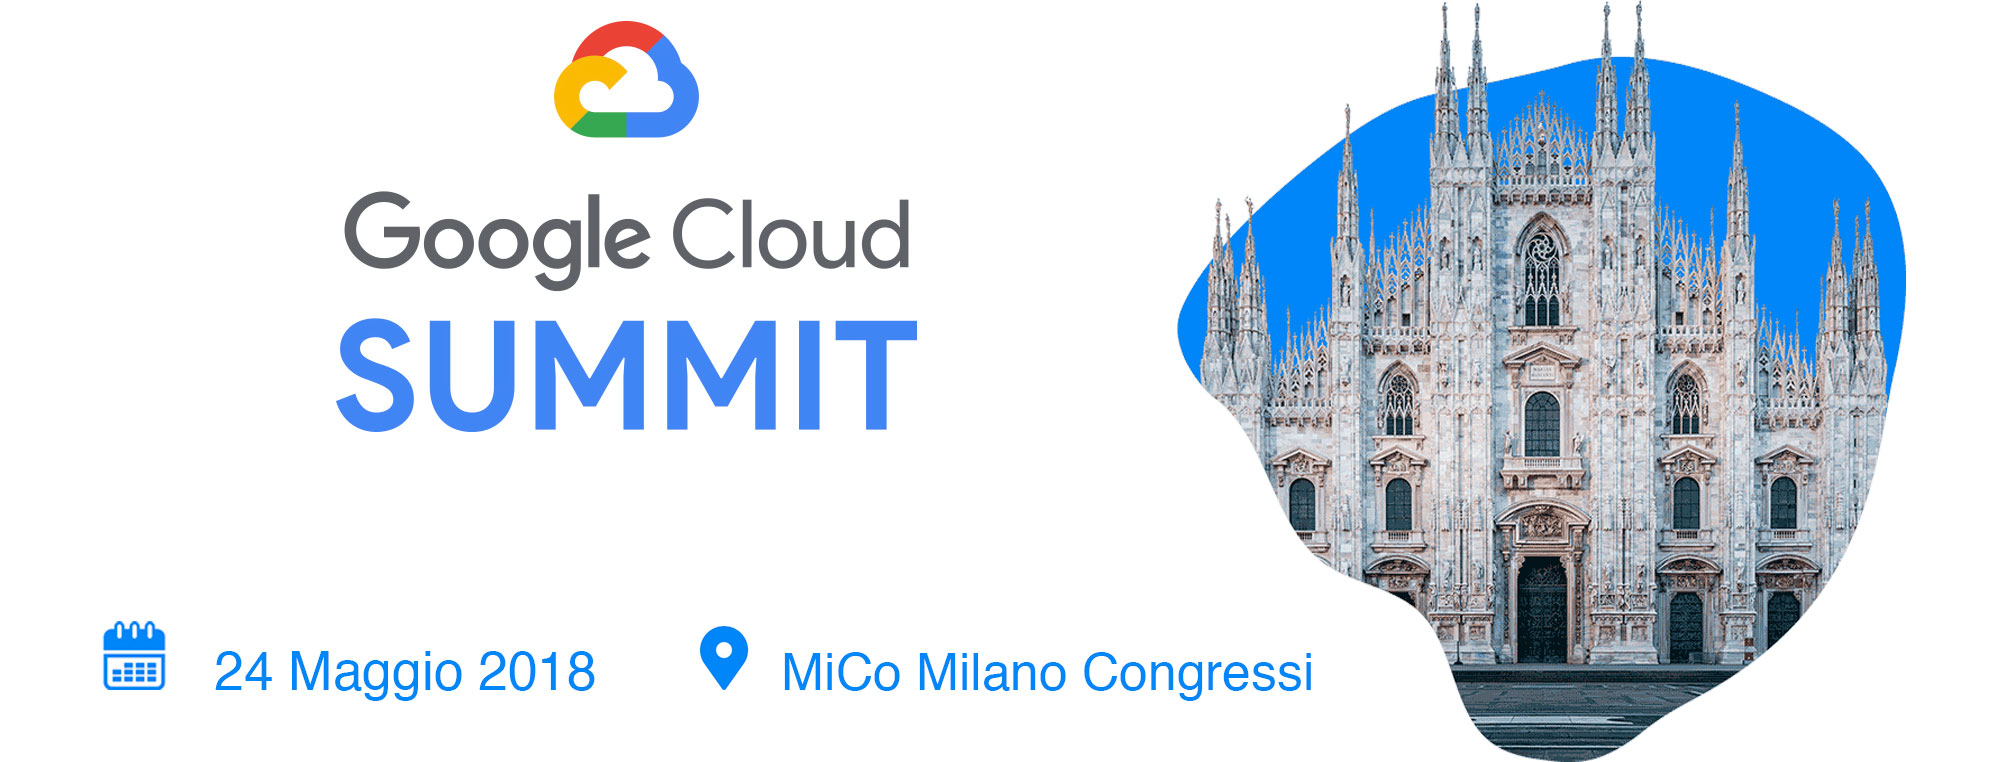 Google Cloud Summit 2018